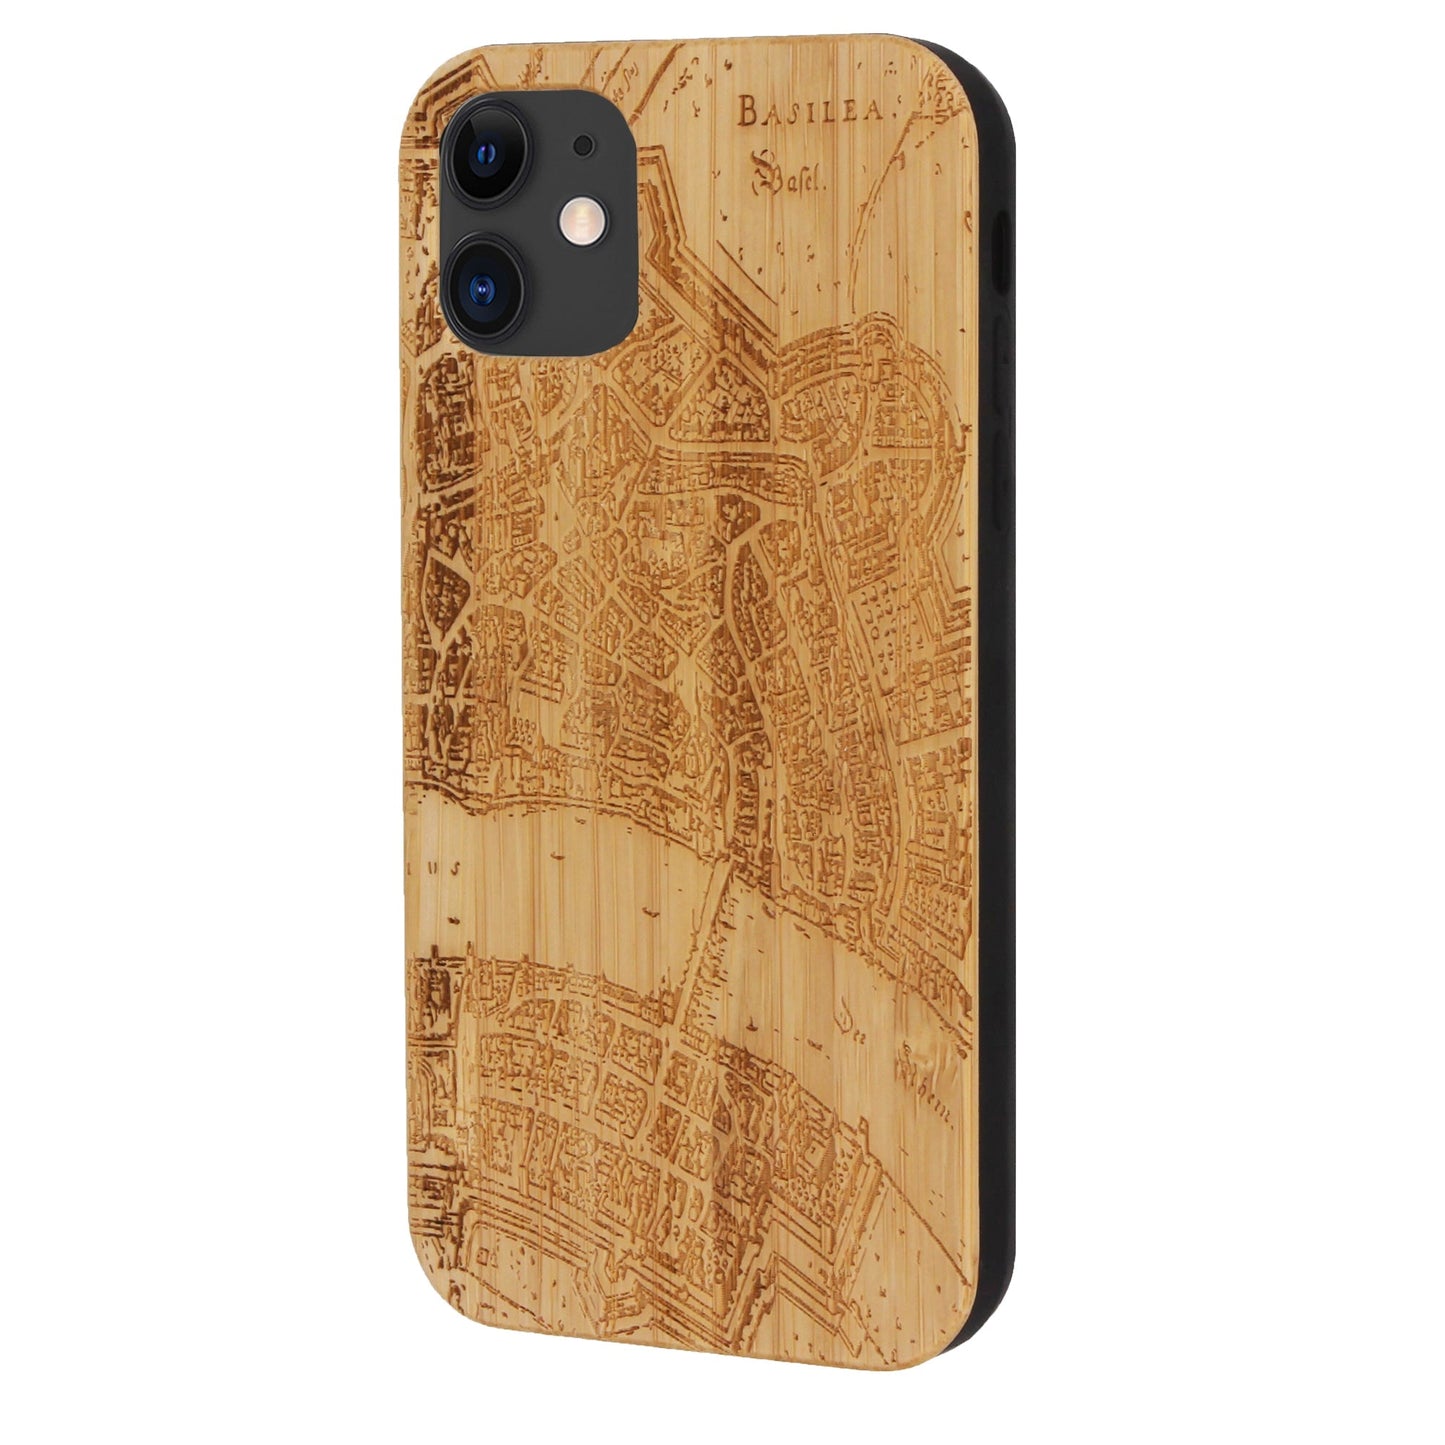 Basel Merian Eden Bamboo Case for iPhone 11